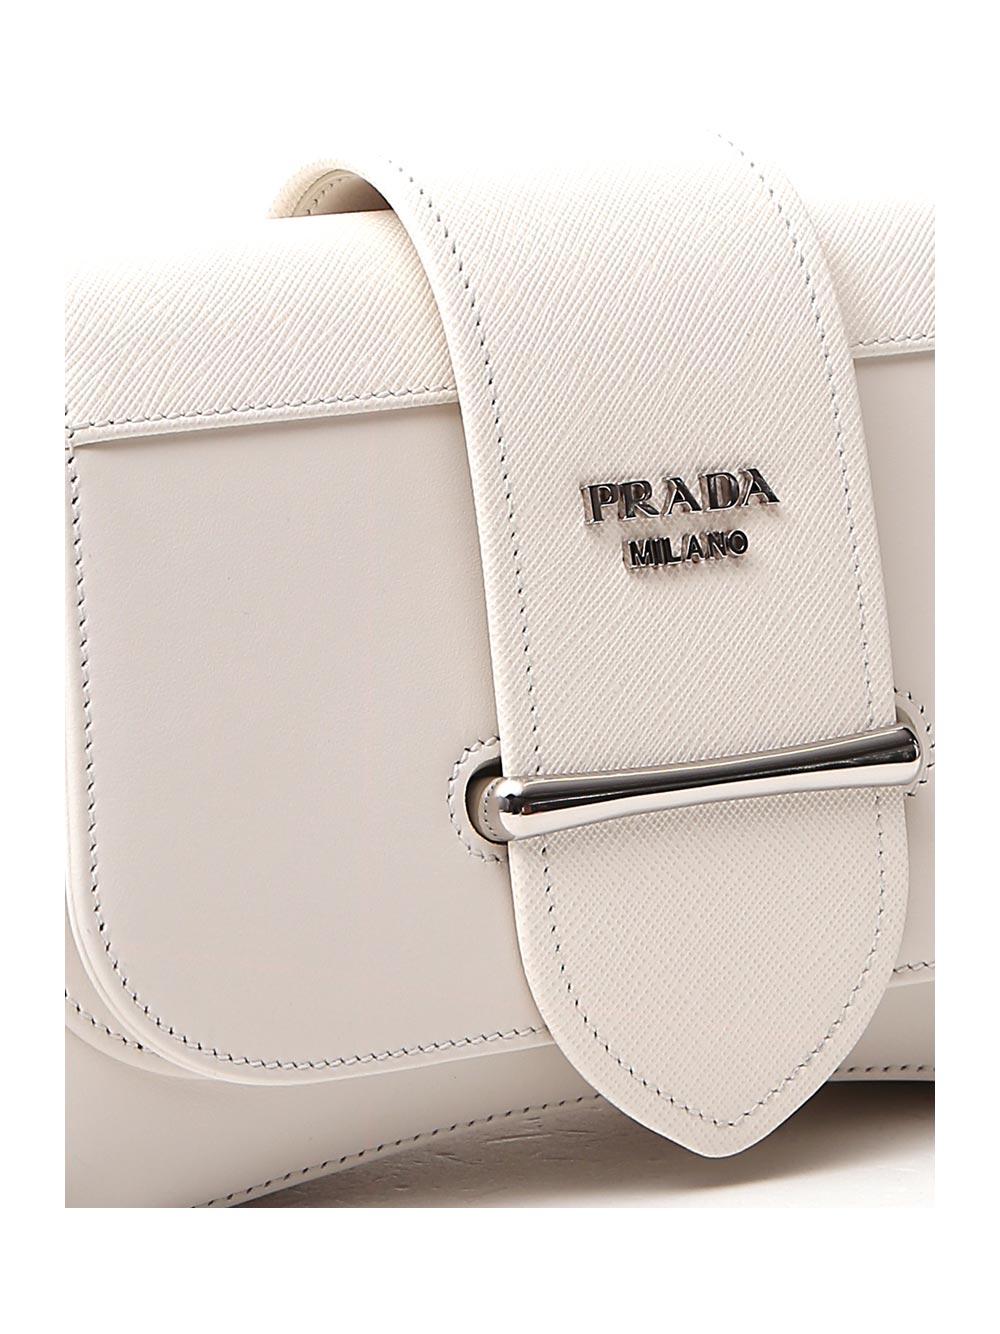 Prada Sidonie Saffiano Leather Bag in White